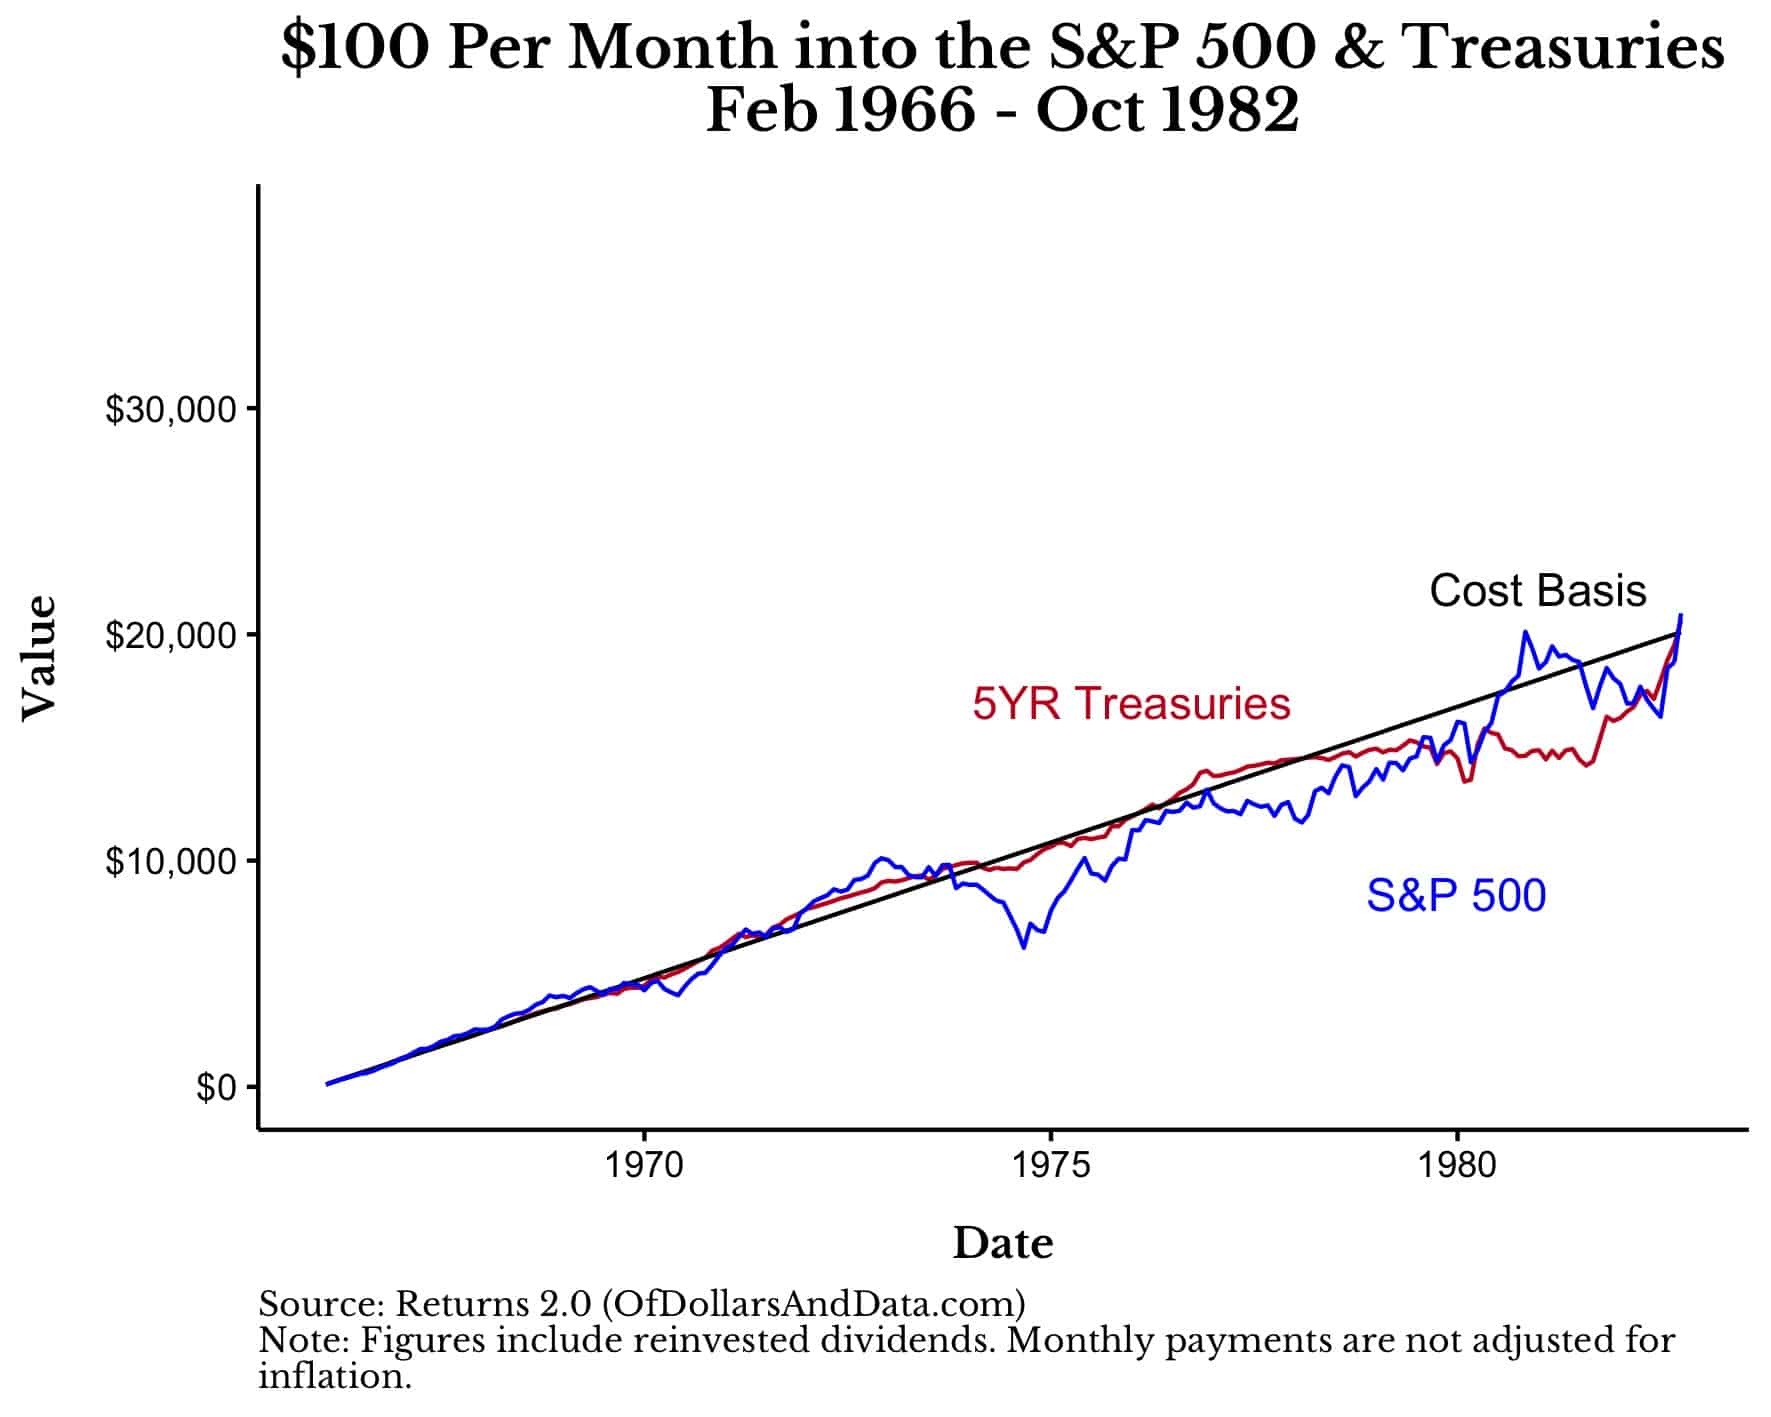 $100 per month into the S&P 500 from Feb 1966 to Oct 1982 in S&P 500 and Treasuries